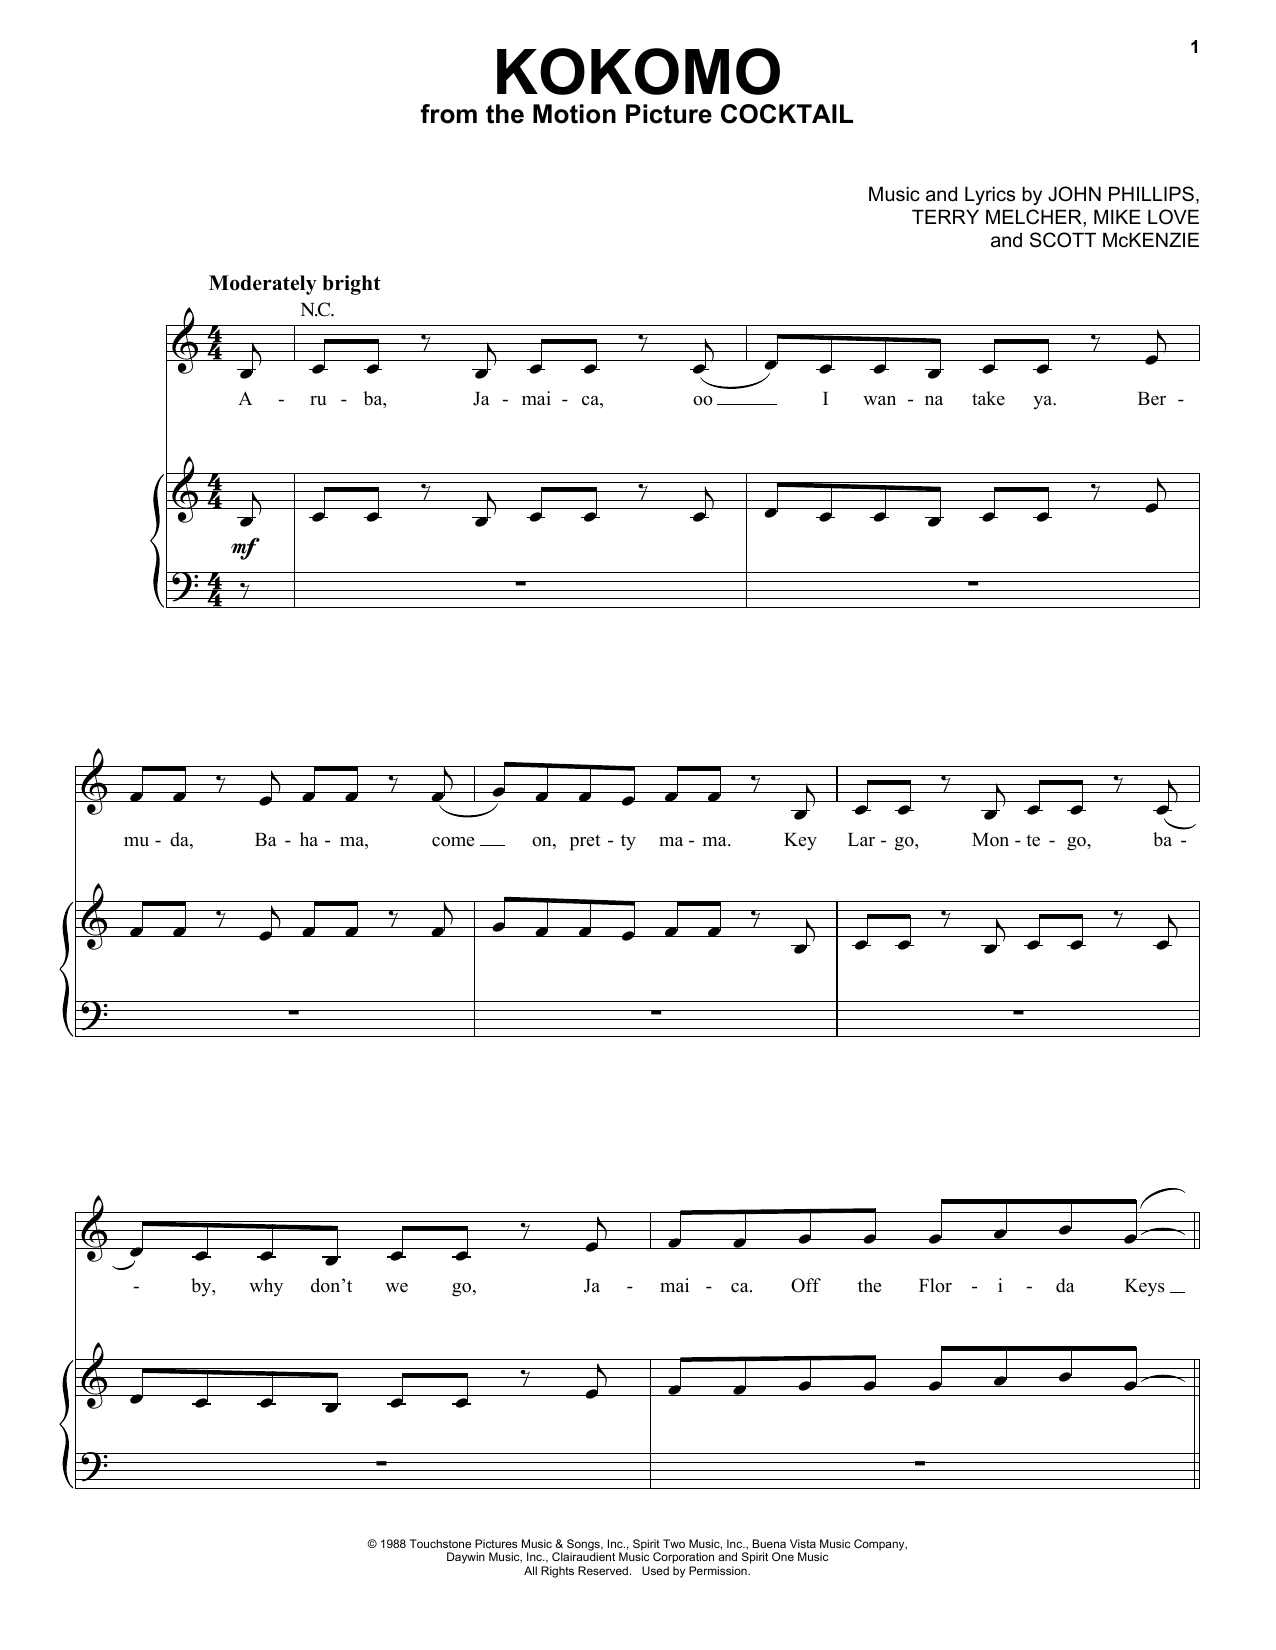 The Beach Boys Kokomo sheet music notes and chords arranged for Lead Sheet / Fake Book